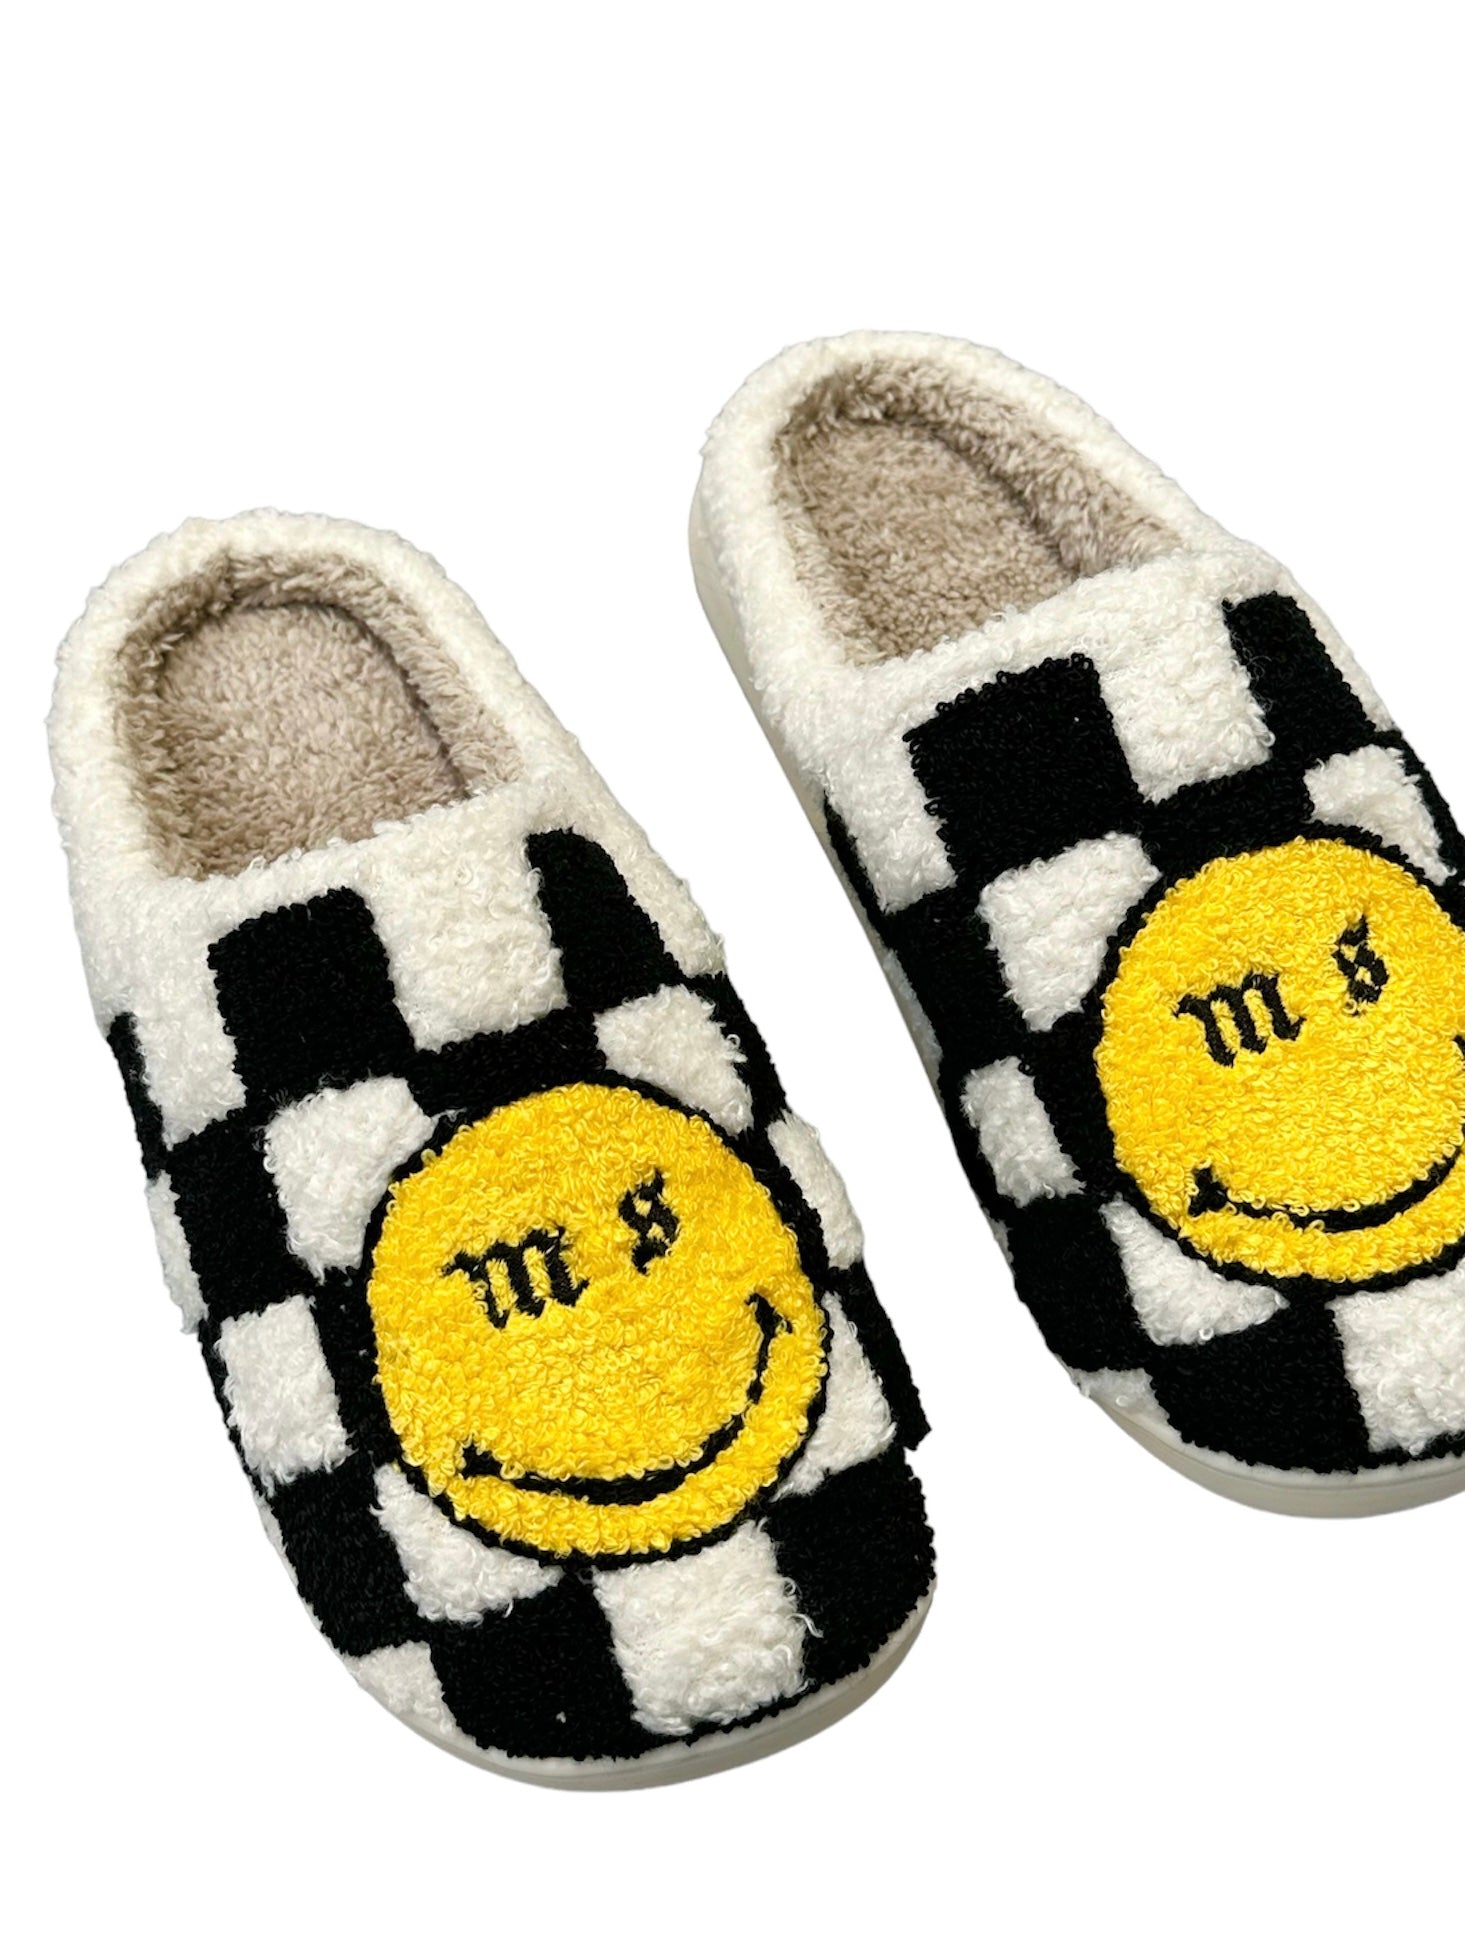 Black Check Smiley slippers.